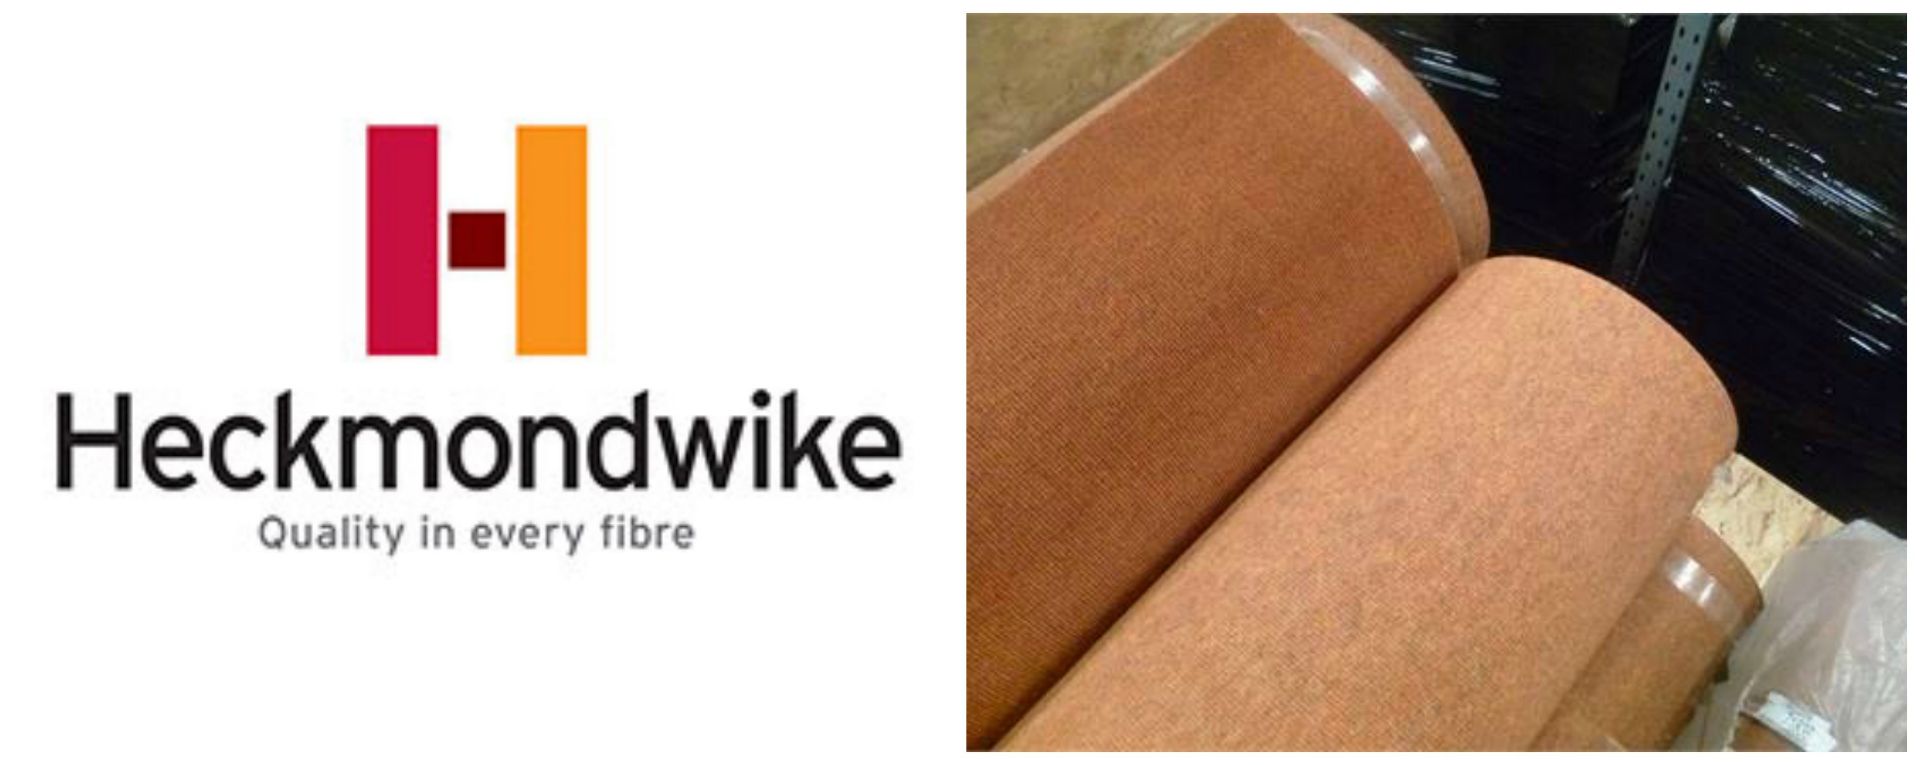 Heckmondwike Broadrib (Heavy Duty Carpet) - Spice 

Broadrib is widely used in the education - Image 2 of 2